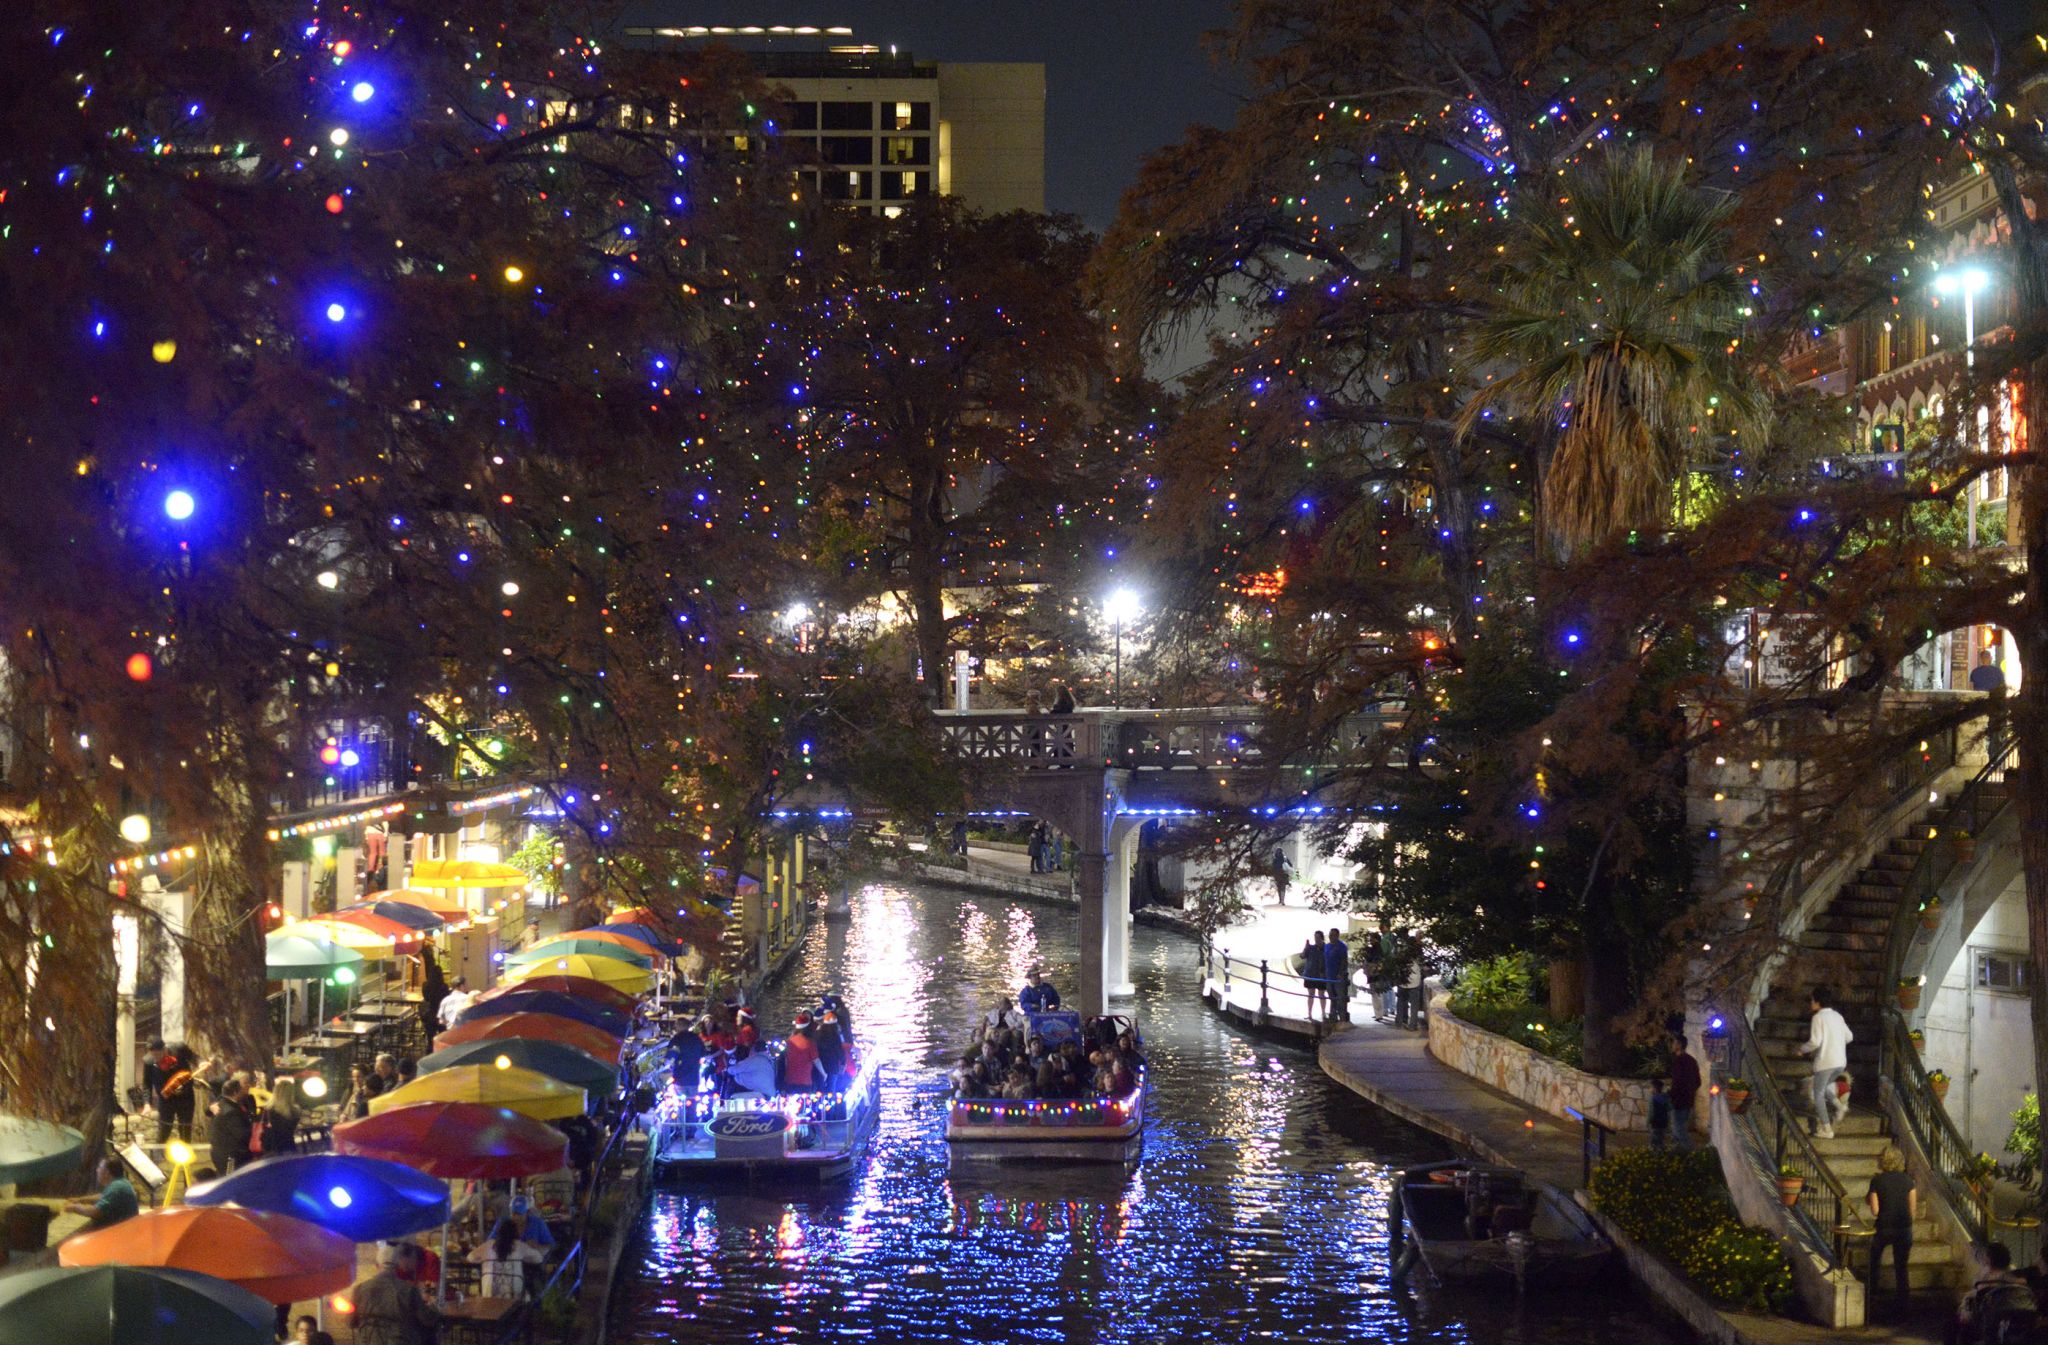 San Antonio lands 4 spots on Top 20 Holiday Lights in Texas